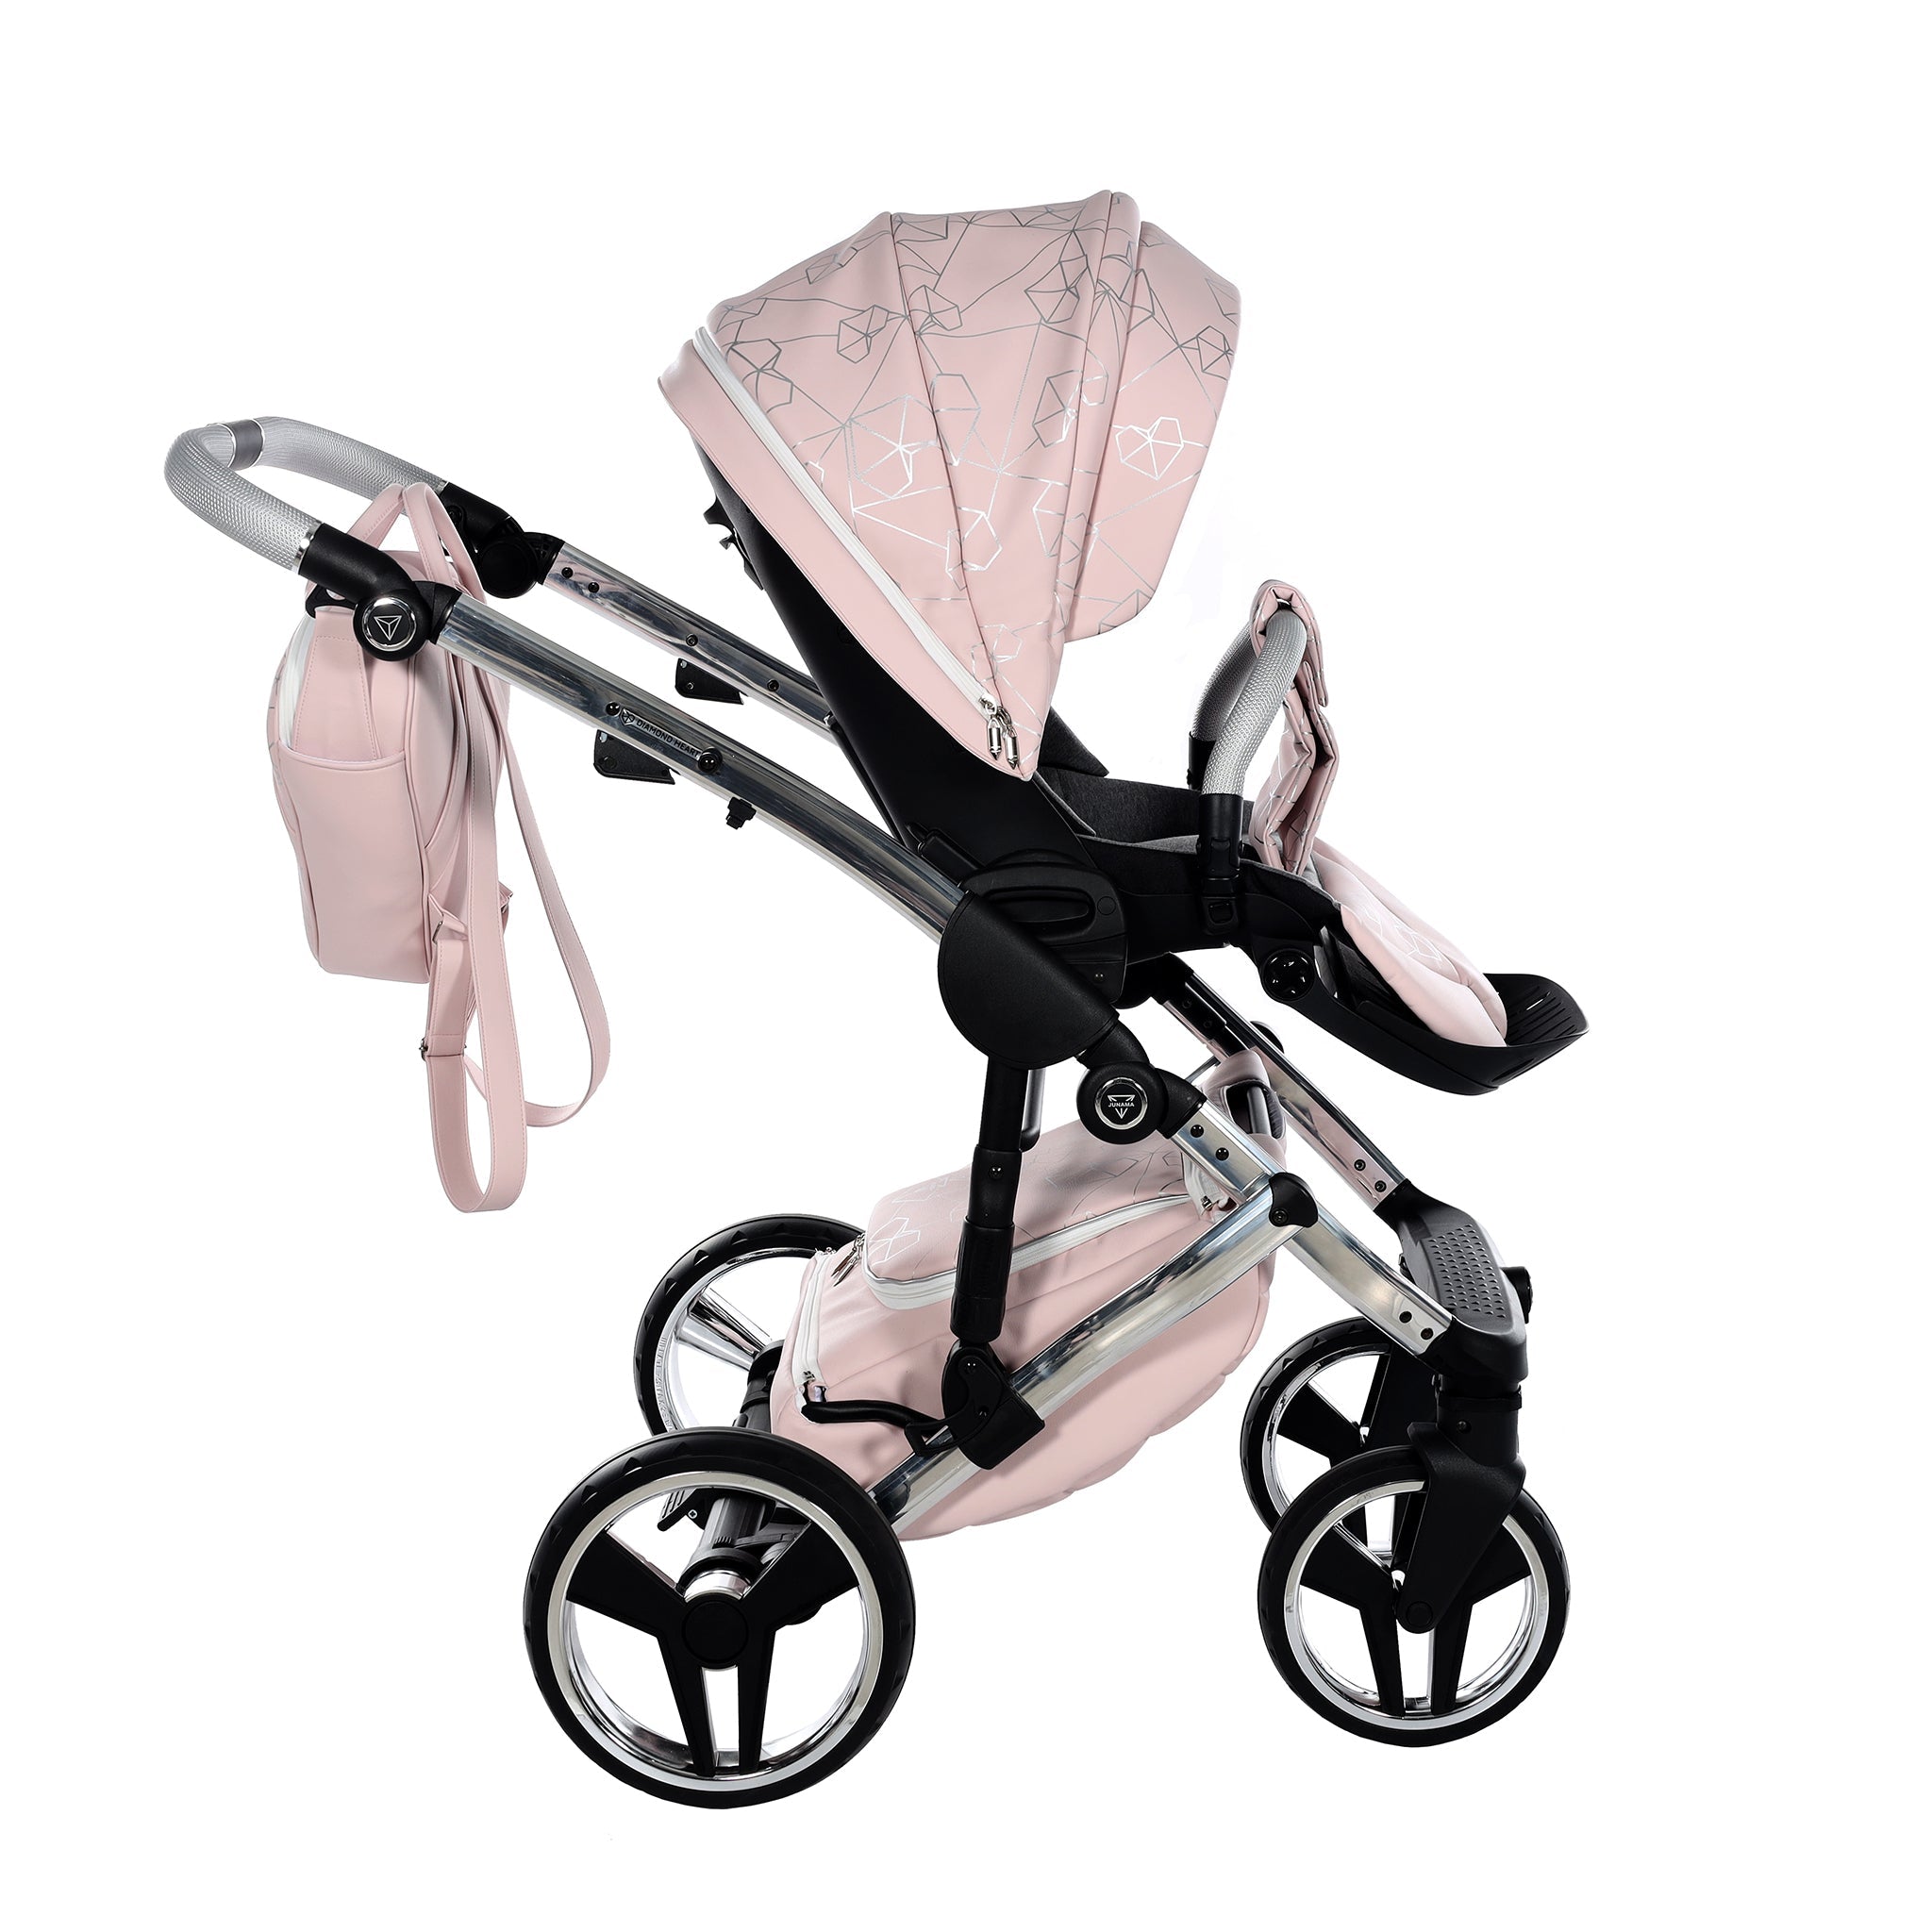 Junama Heart, baby prams or stroller 2 in 1 - Pink and Silver, Code number: JUNHERT06